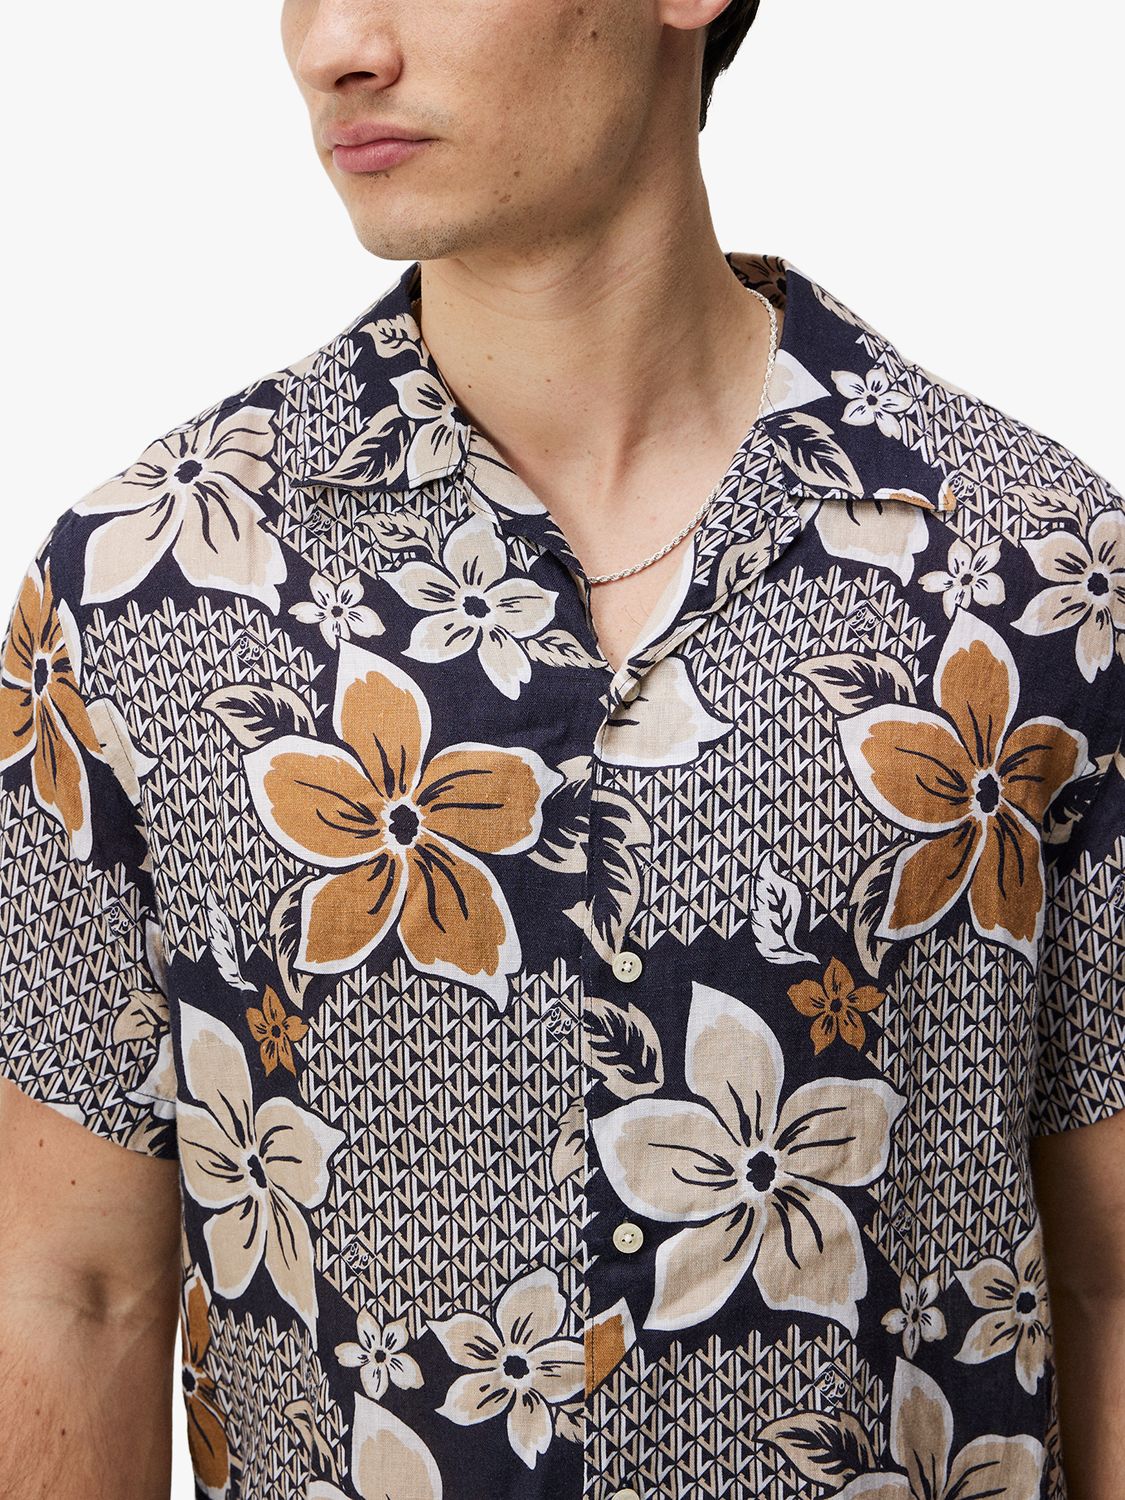 J.Lindeberg Elio Linen Island Floral Shirt, Safari, L